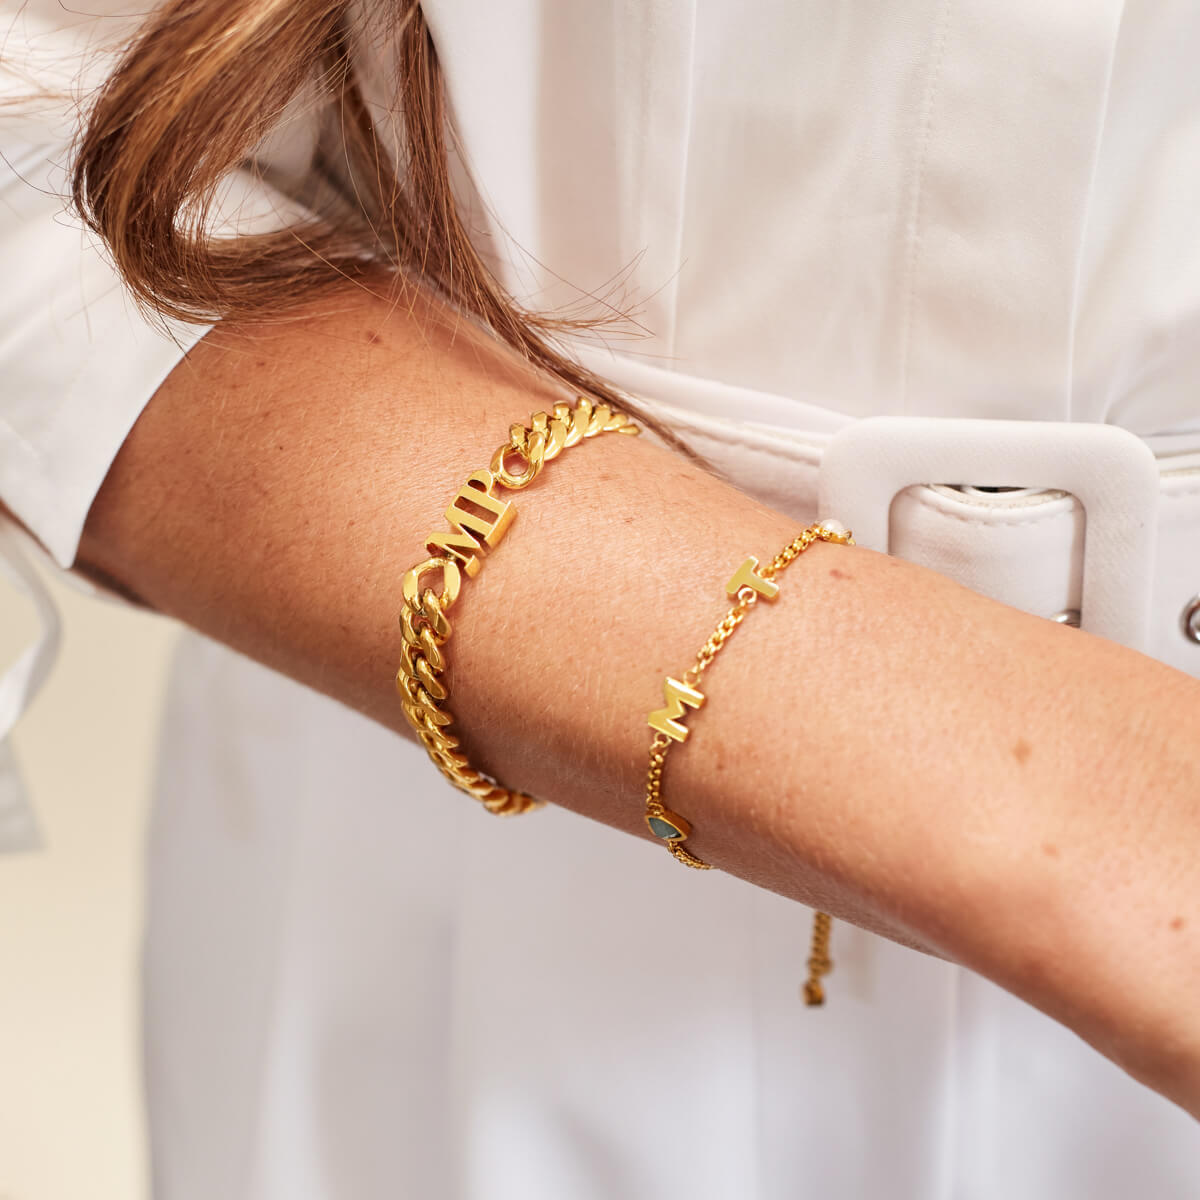 Build Your Own Gold & Rose Charm Bracelet